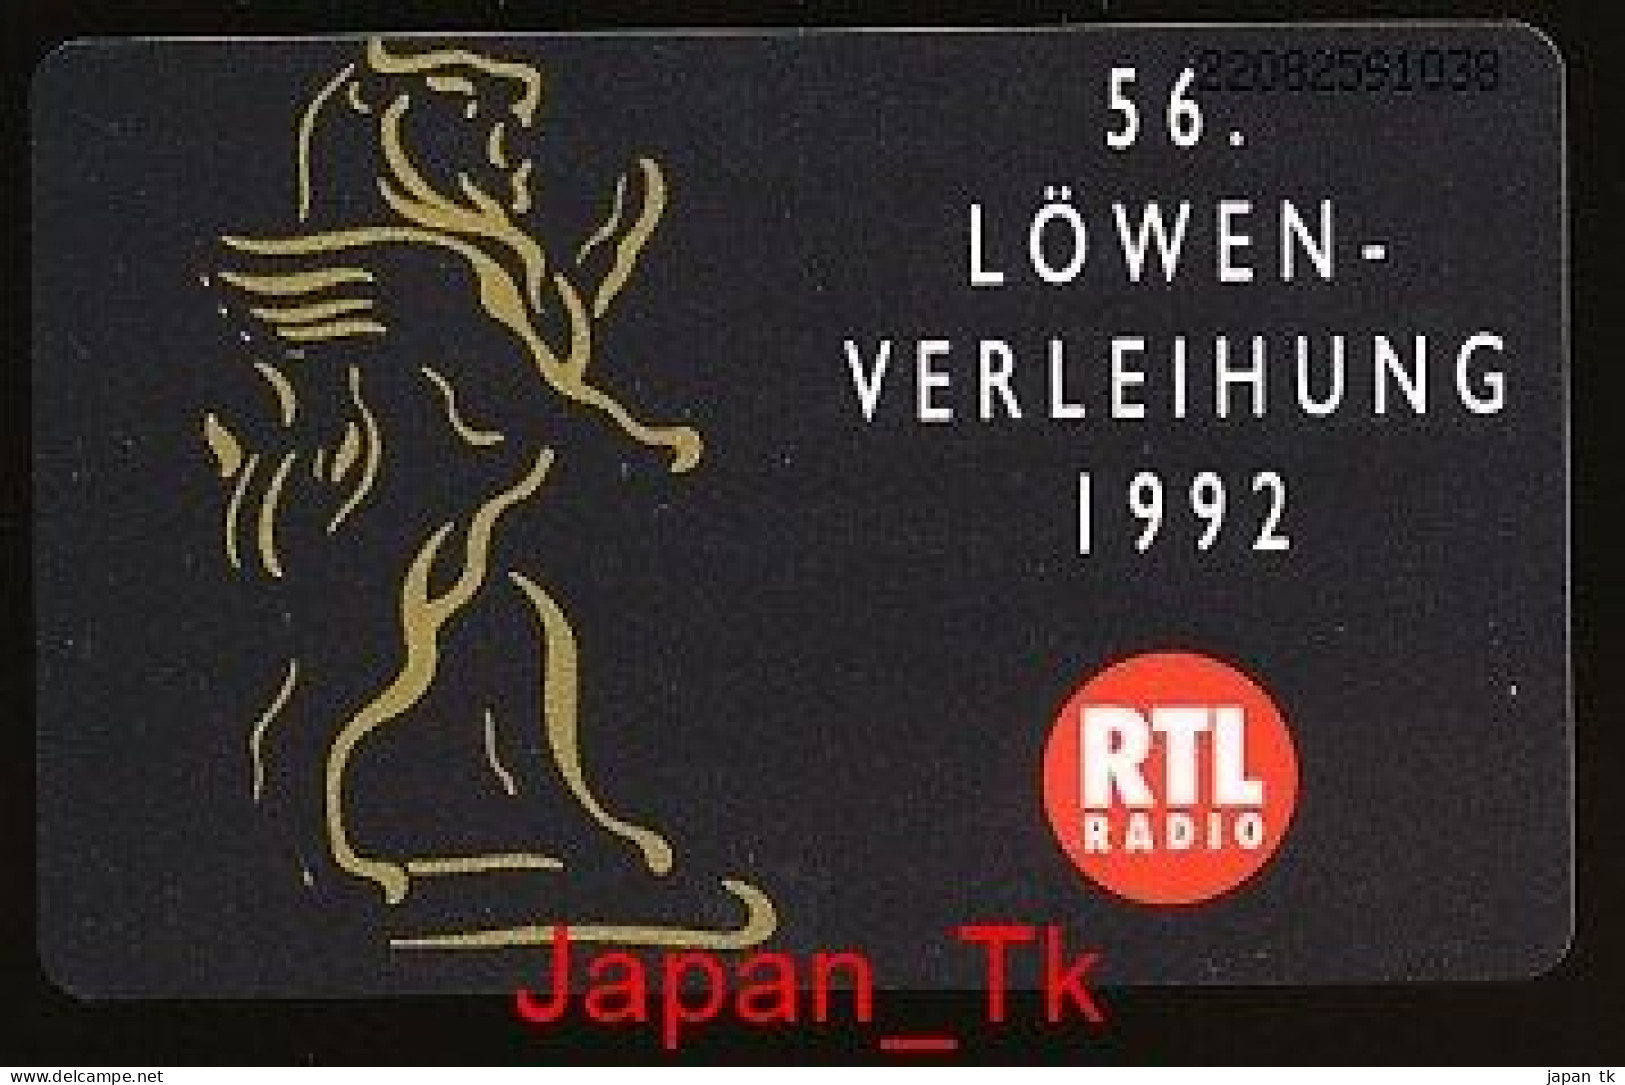 GERMANY K 192  92  RTL Radio - Aufl  3 000 - Siehe Scan - K-Series : Serie Clientes